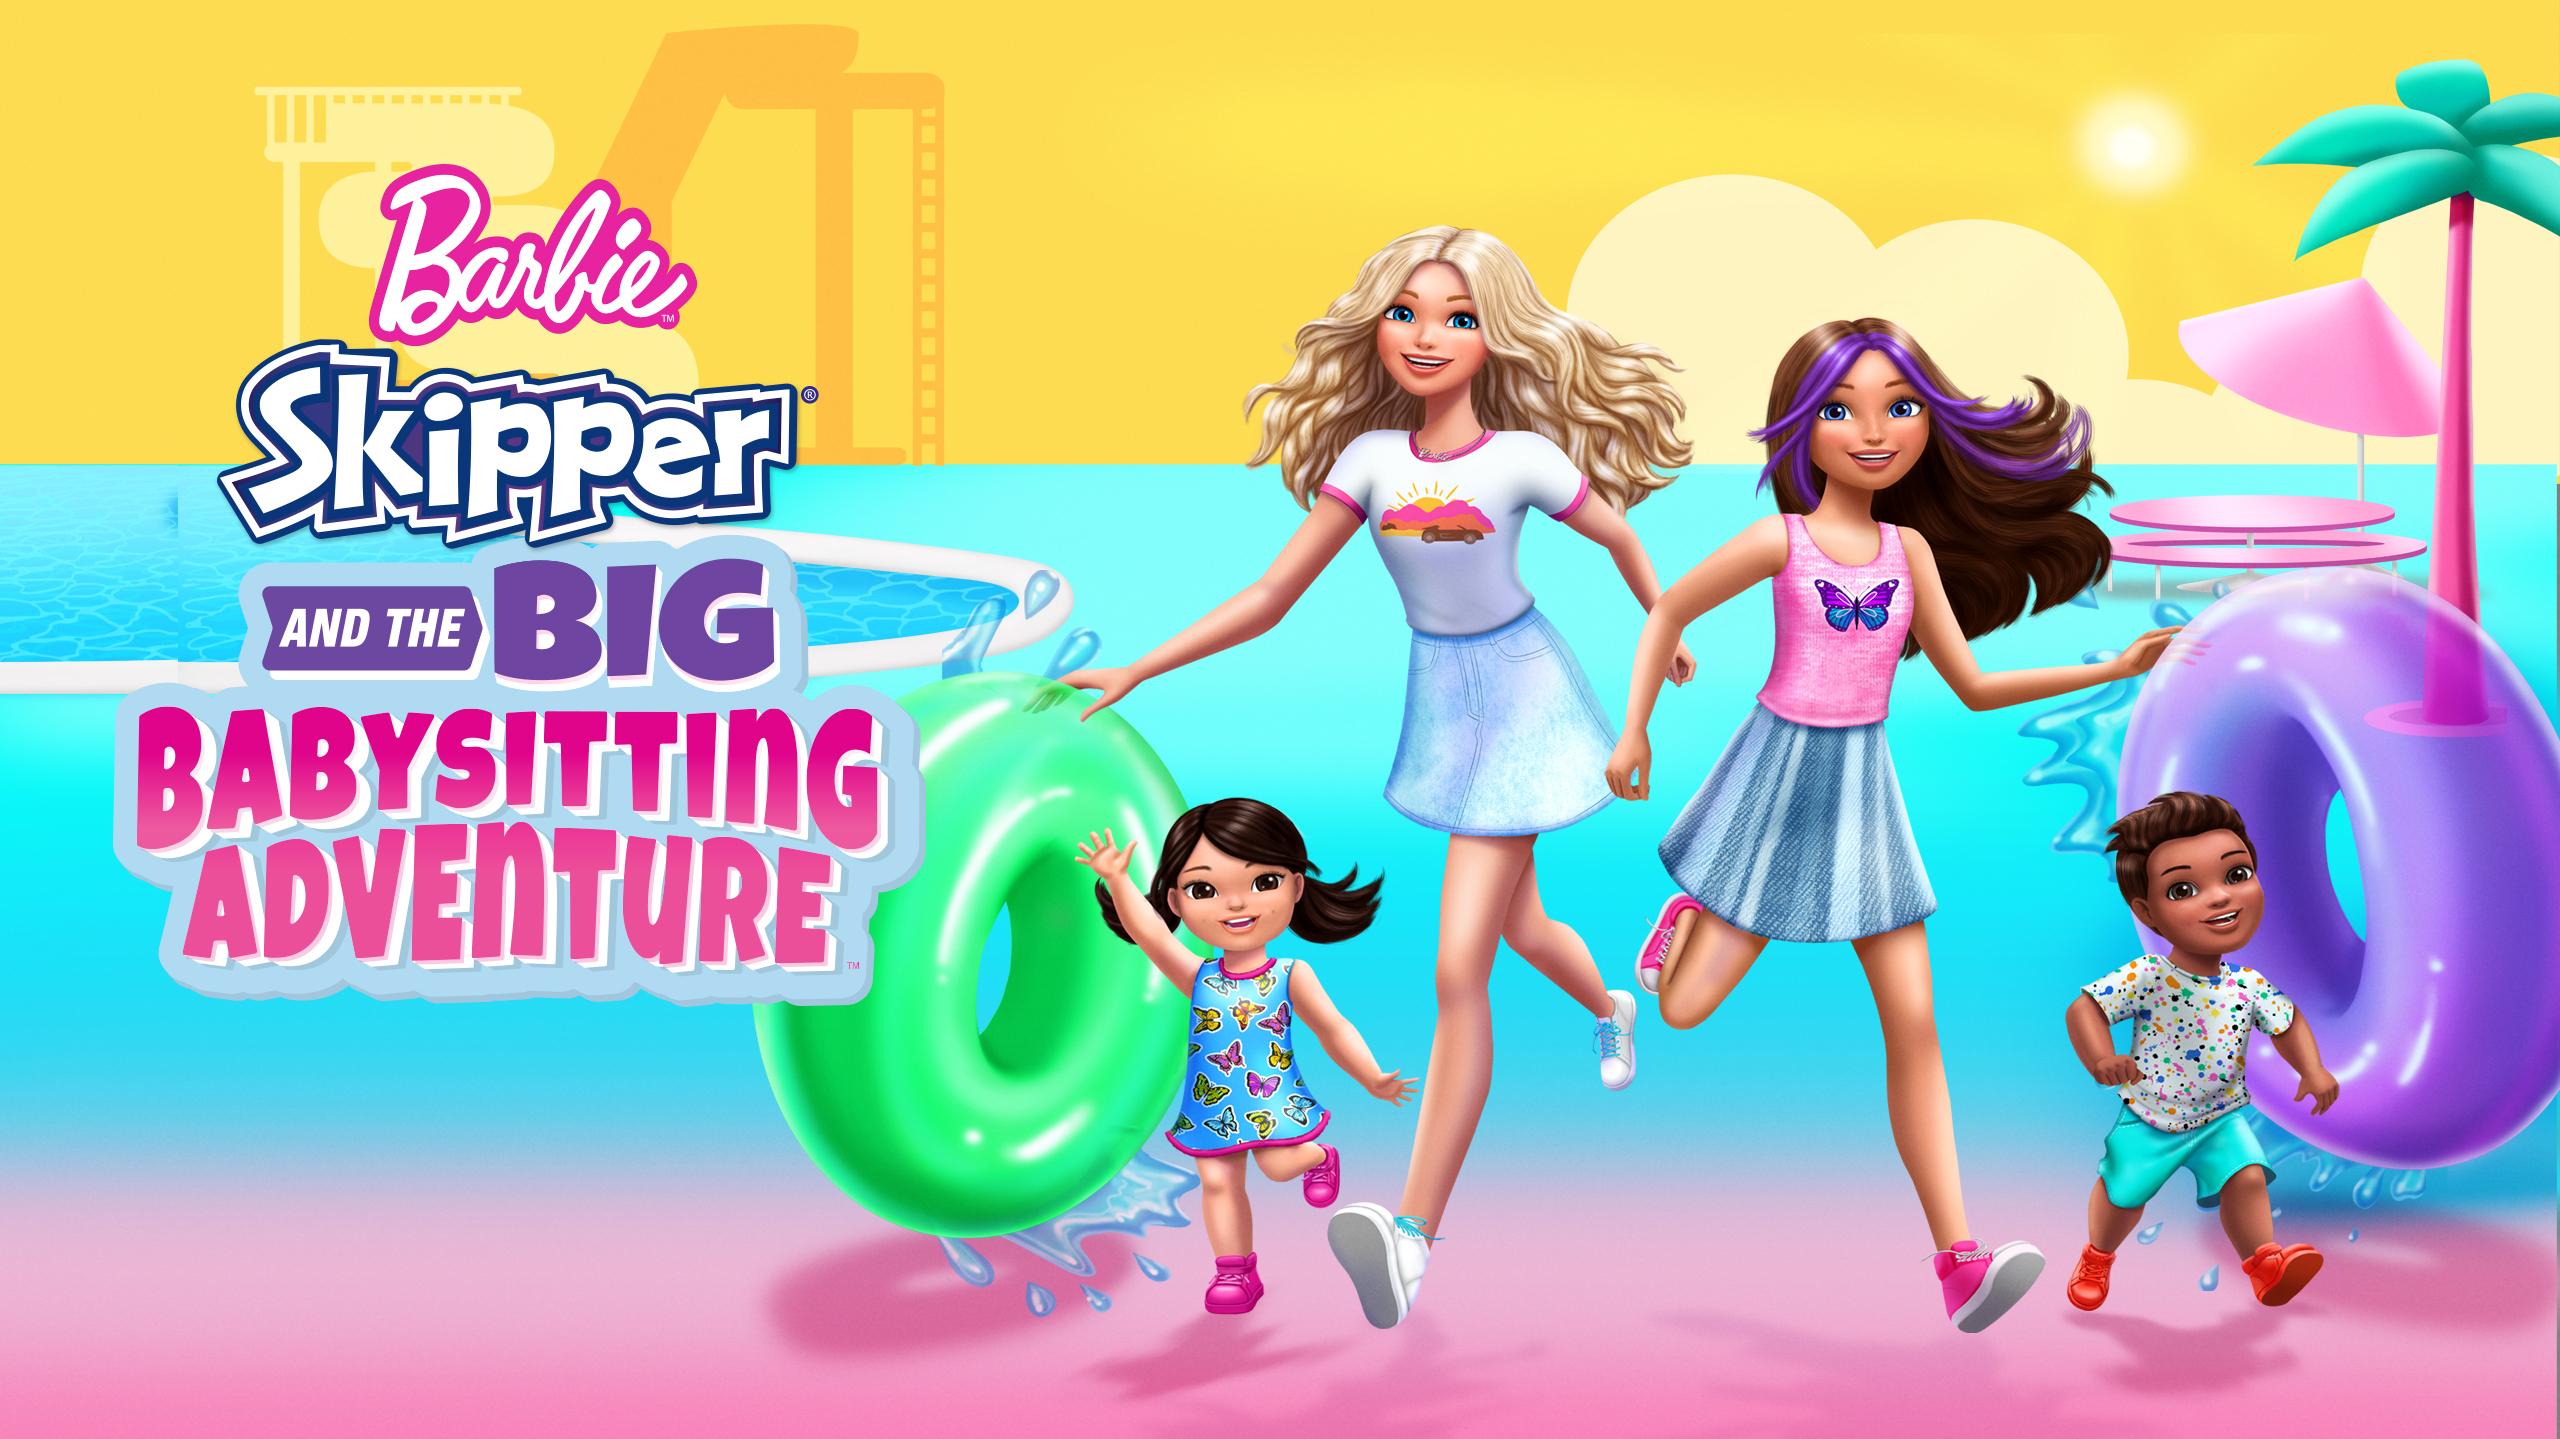 Barbie Skipper And The Big Babysitting Adventure Set To Premiere